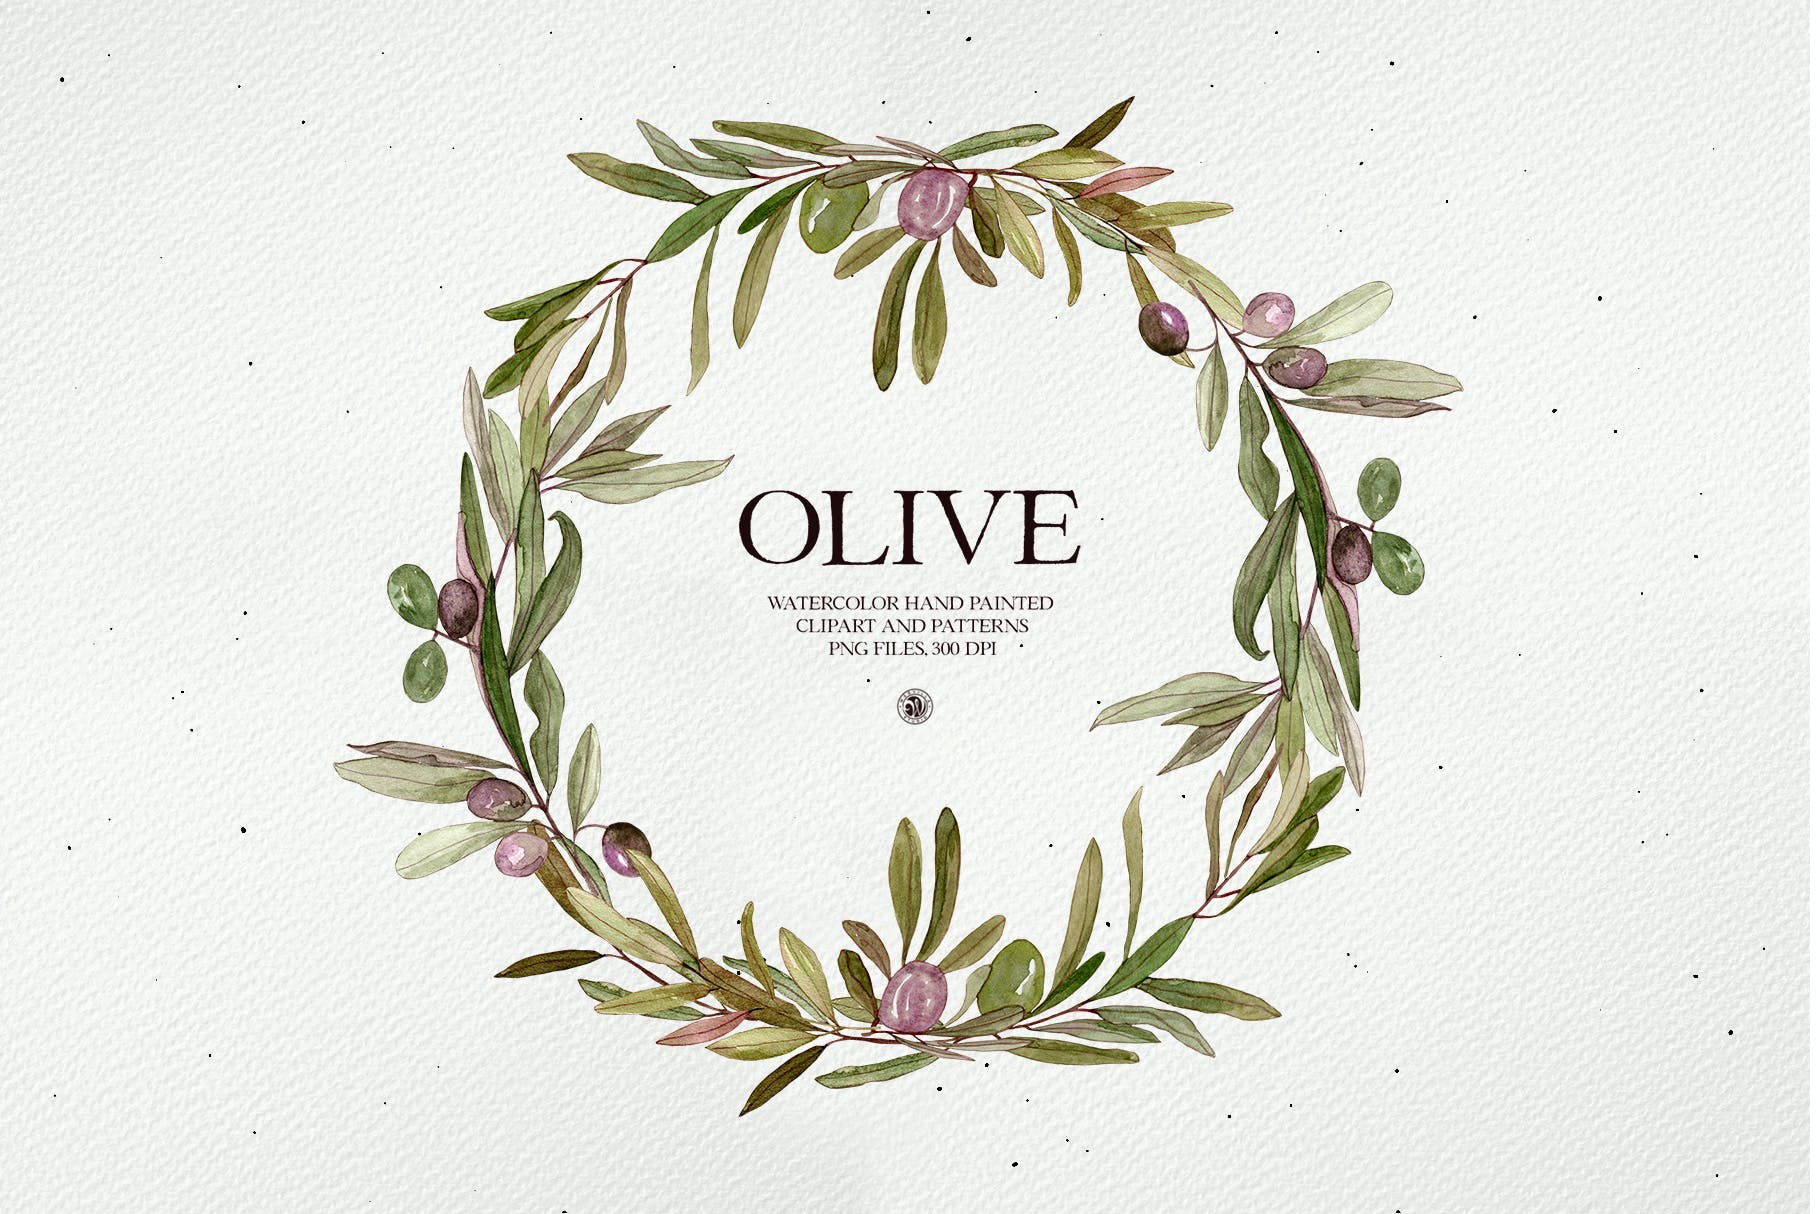 水彩橄榄框架和图案素材 Watercolor Olive – frames and patterns 图片素材 第6张